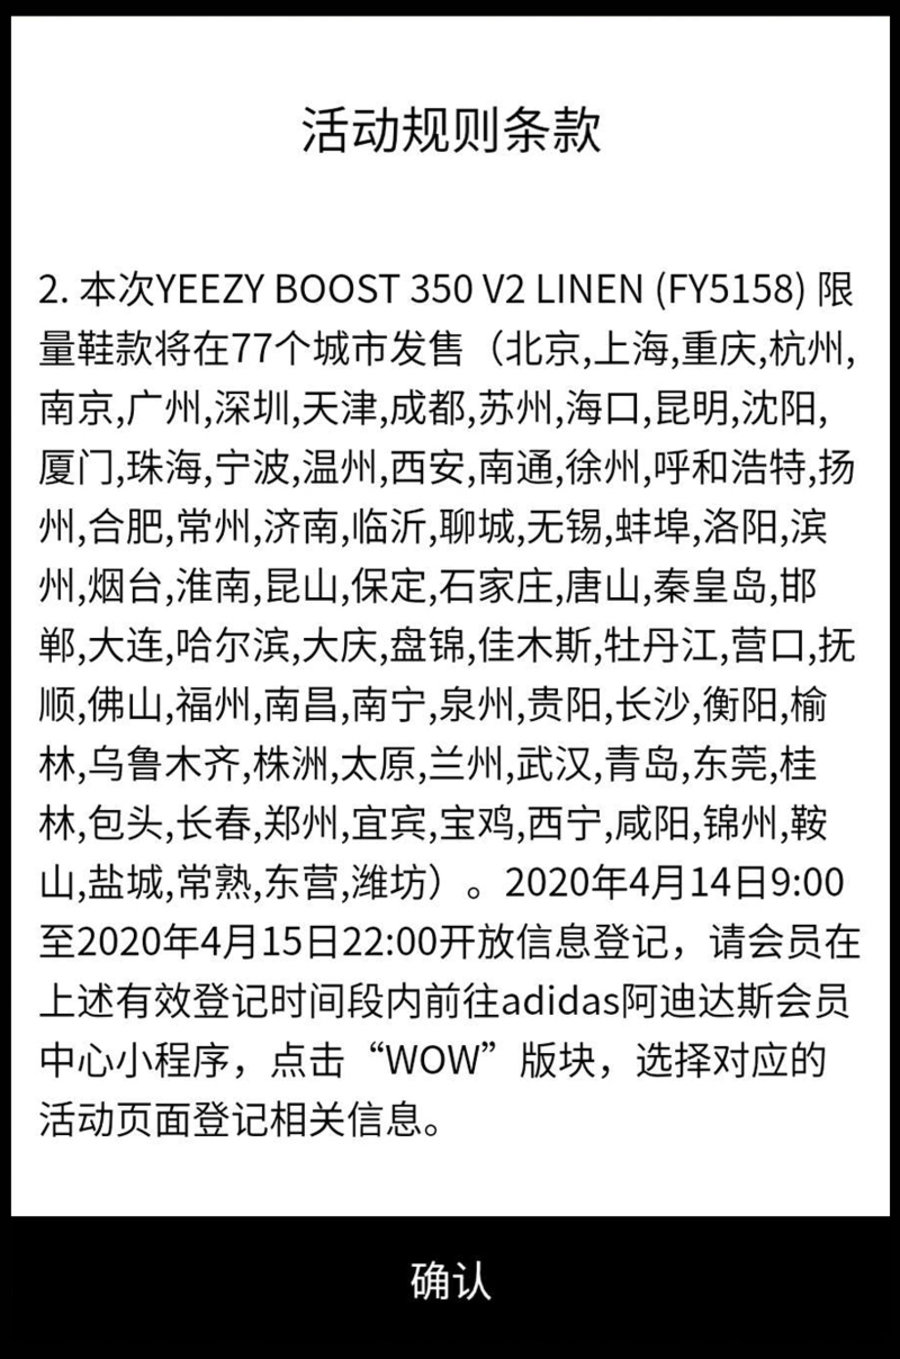 Yeezy 350 V2,adidas,发售,FY5158  小程序登记刚刚开启！Yeezy 350 V2 “Linen” 周六发售！